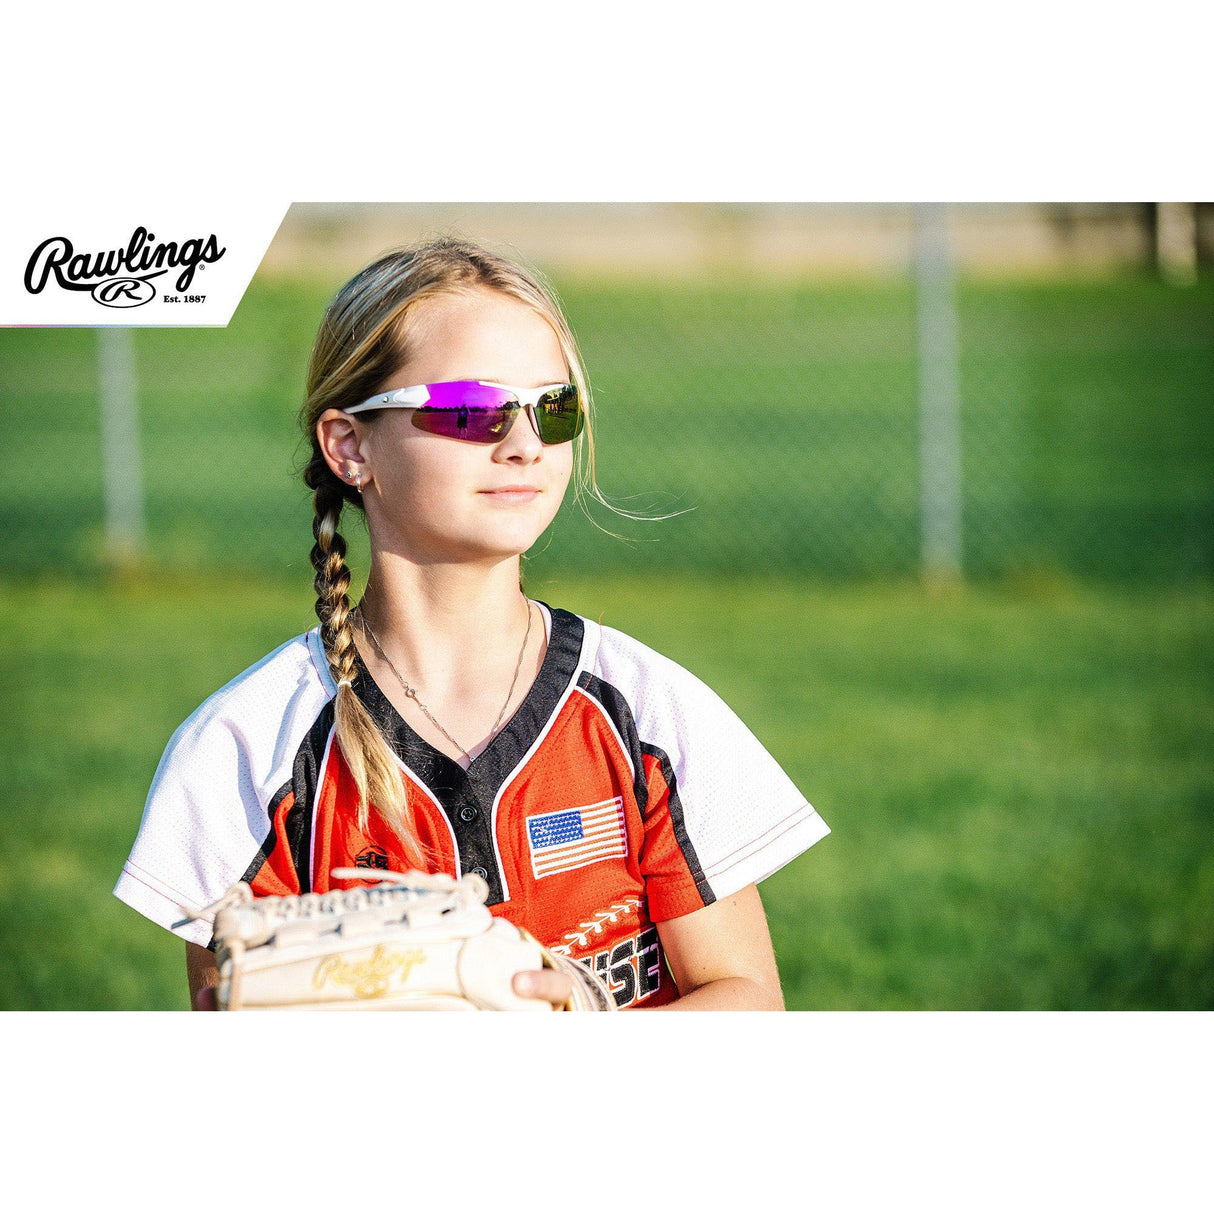 Rawlings Youth Boys Sports Baseball Sunglasses Durable 100% UV Poly Lens, White/Mint, Kids Unisex, Size: One Size